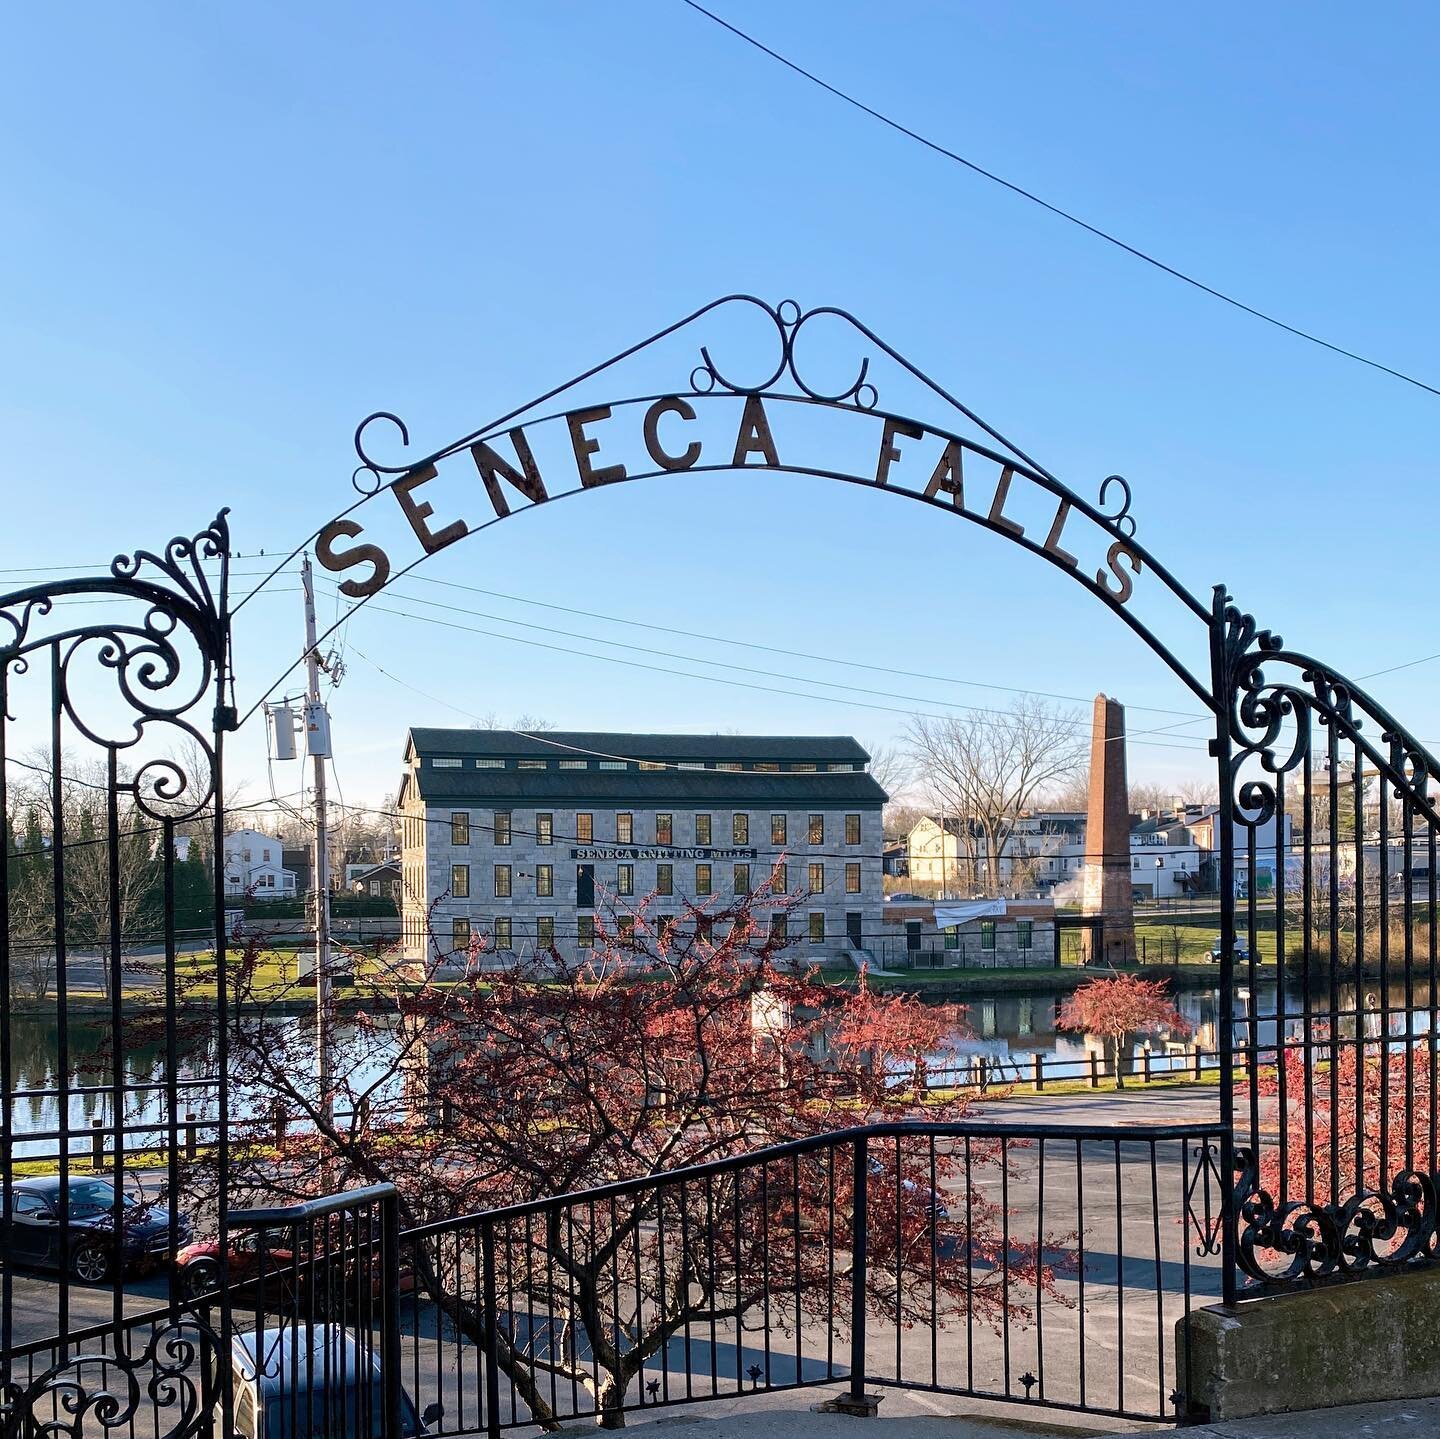 Seneca Falls photo dump, including some v cute houses and a little It&rsquo;s a Wonderful Life, obviously. 

#senecafalls #fingerlakes #fingerlakesny #exploreny #oldhouselove